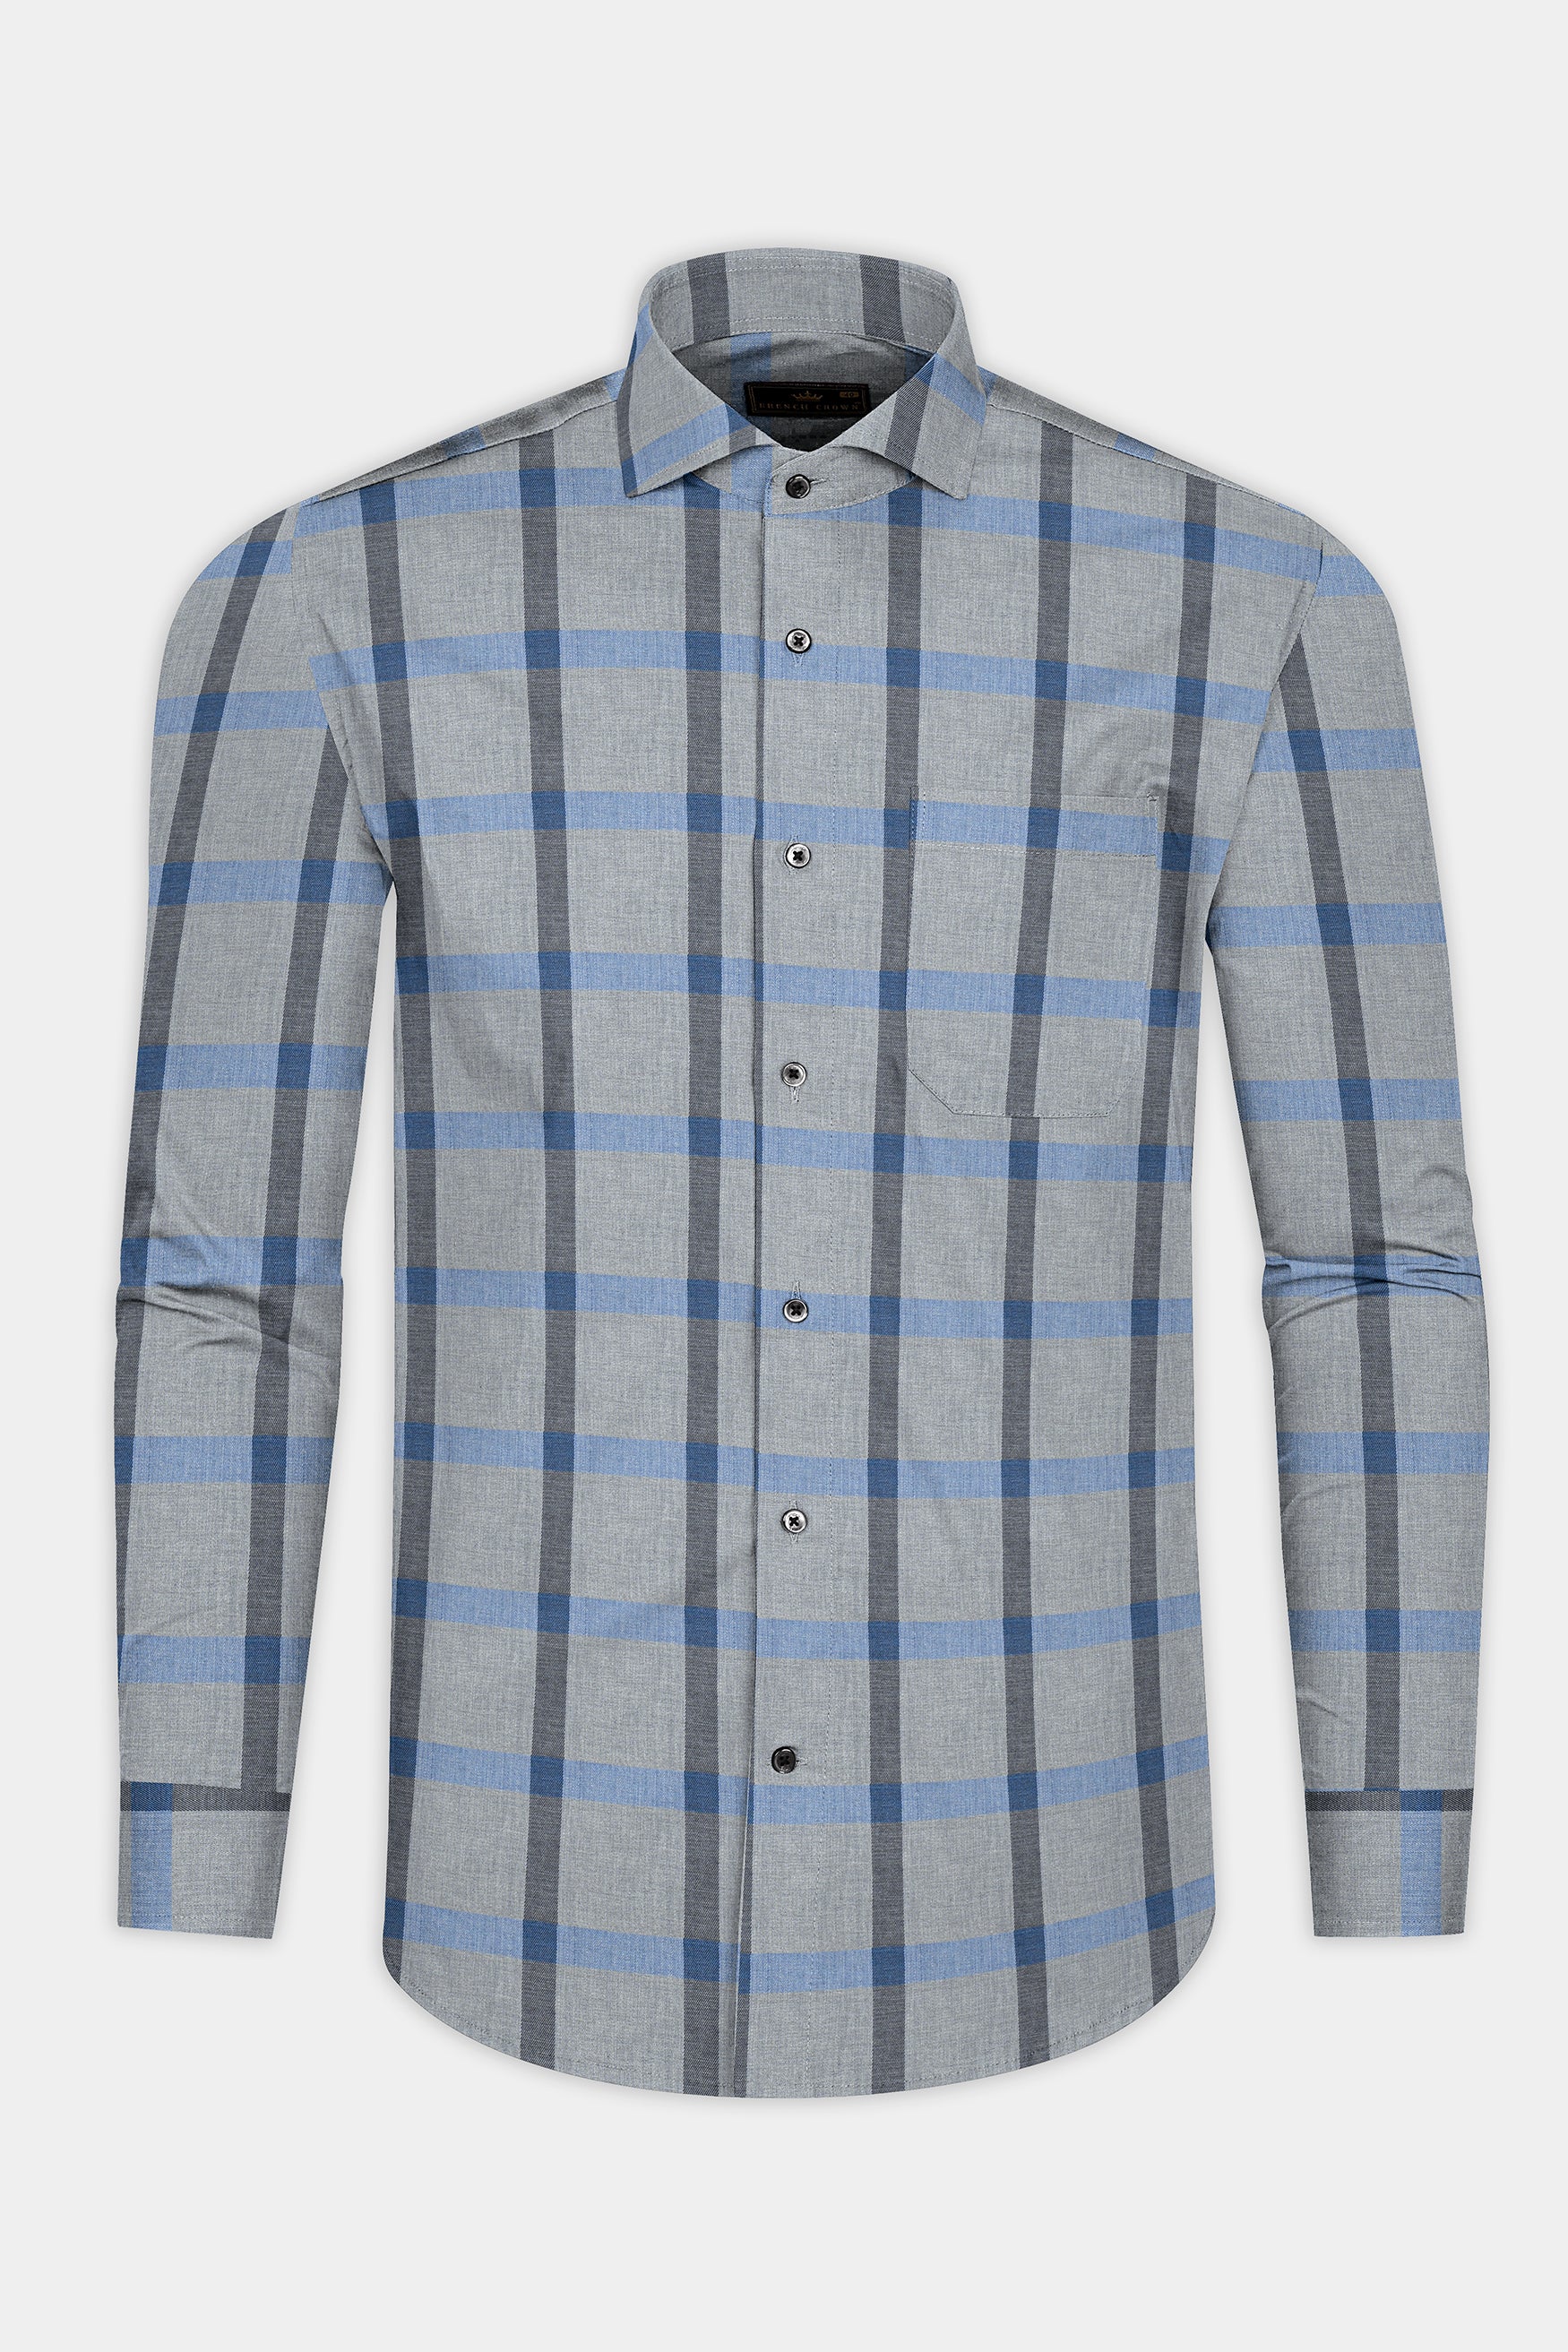 Manatee Gray and Wild Blue Plaid Twill Premium Cotton Shirt